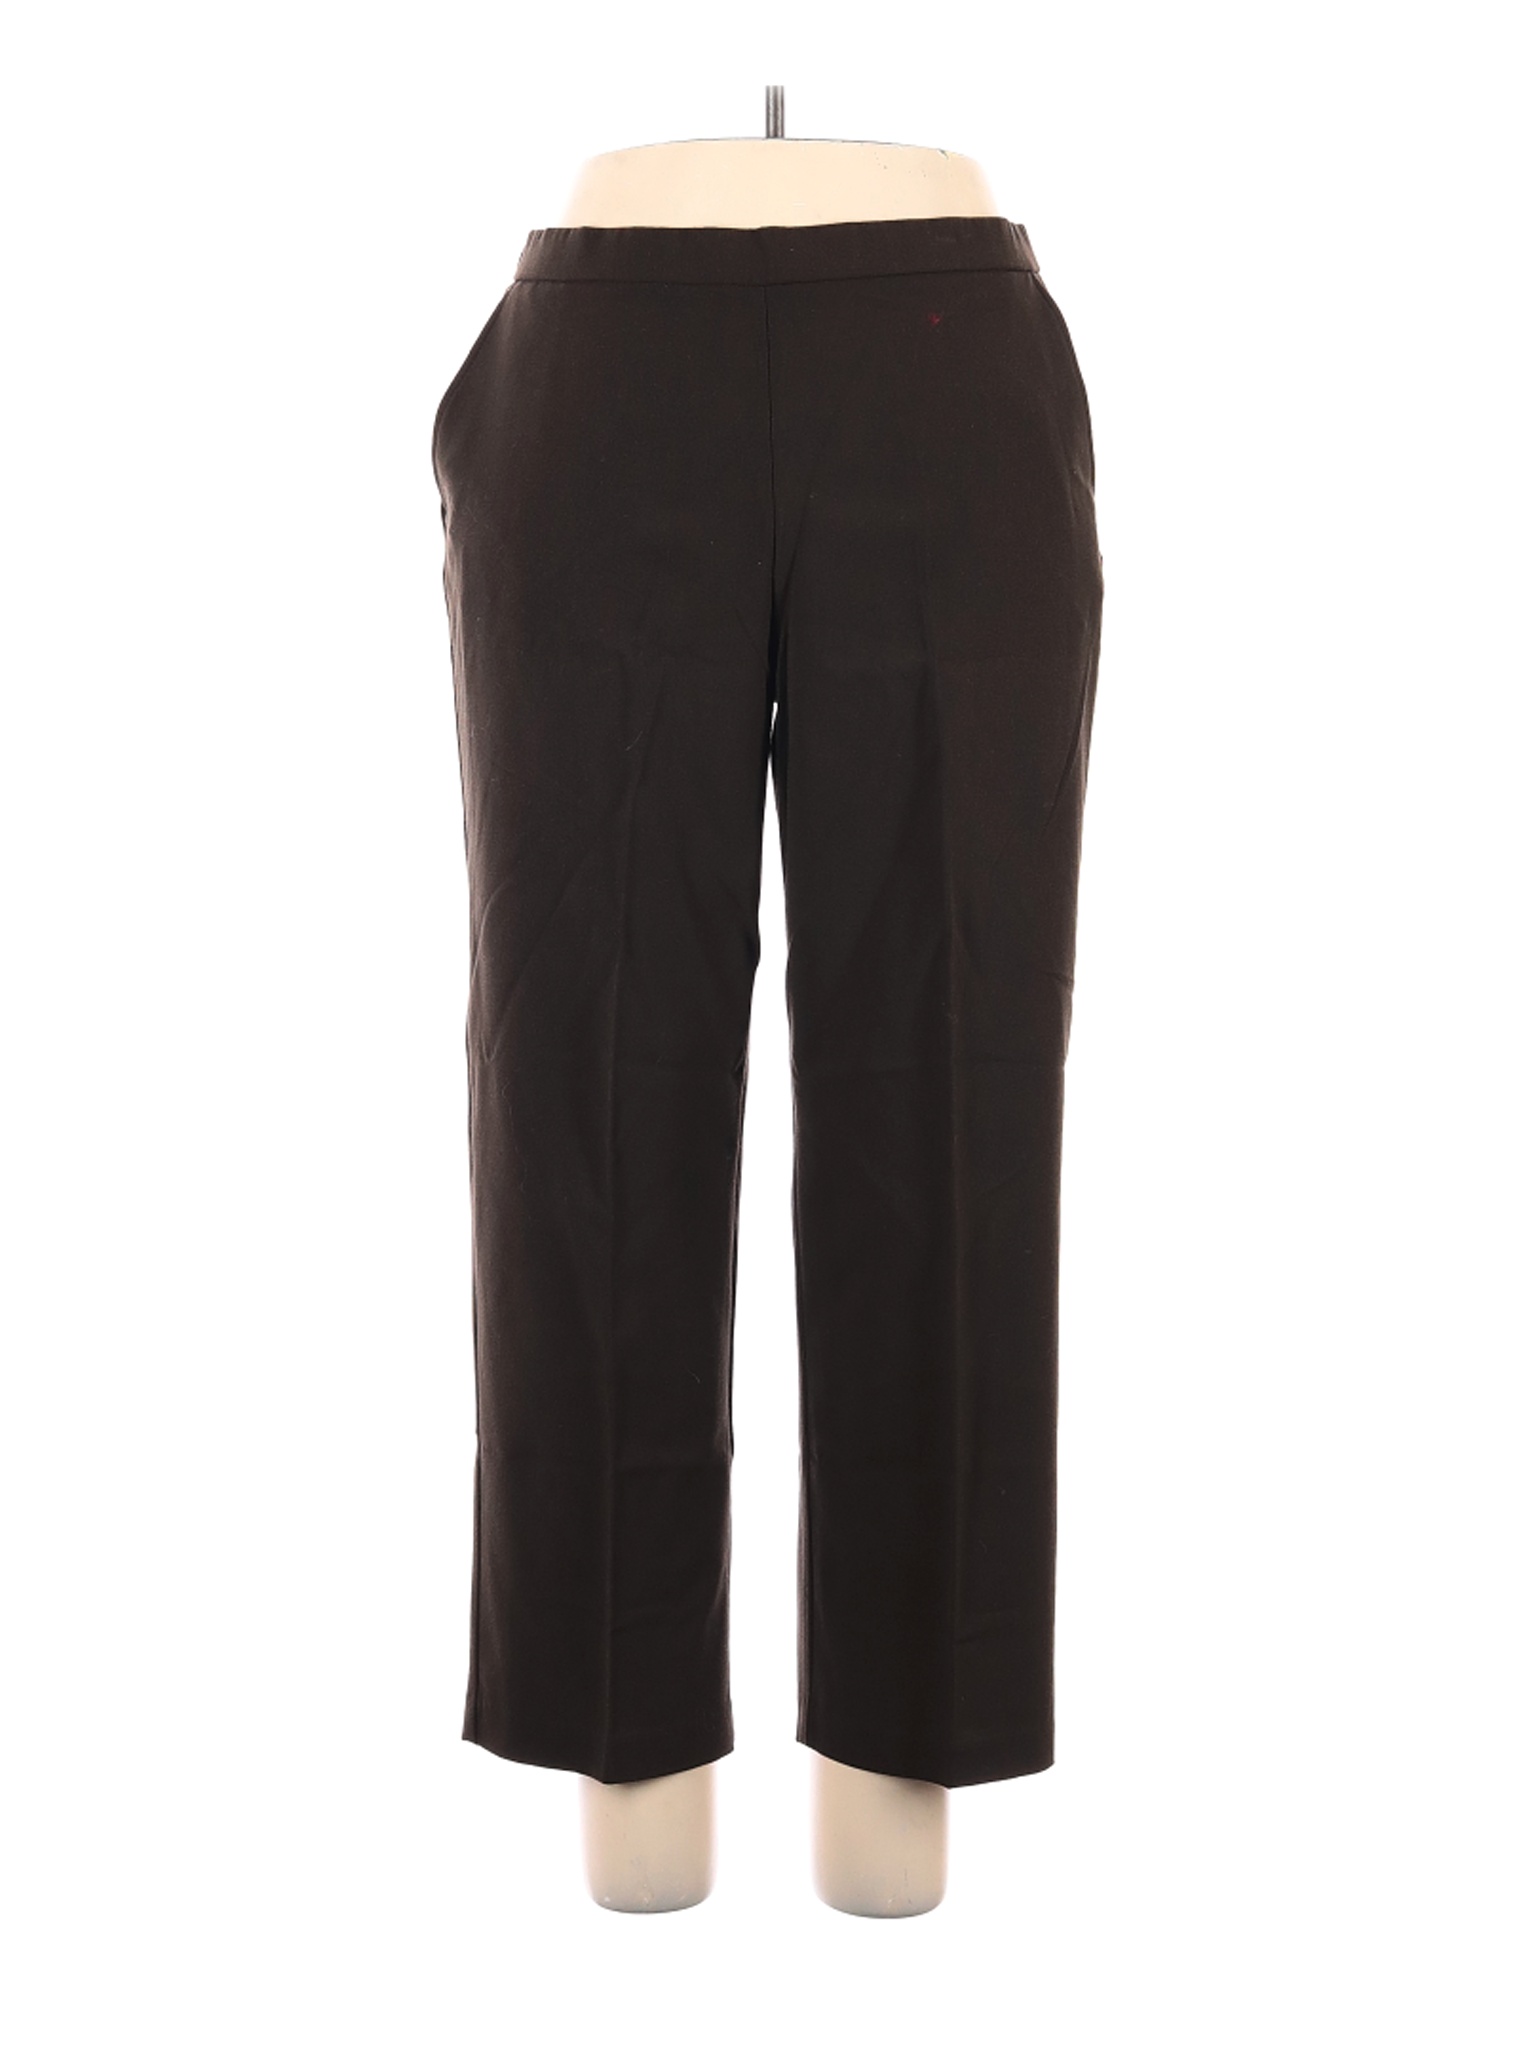 Kim Rogers Women Black Casual Pants 16 | eBay